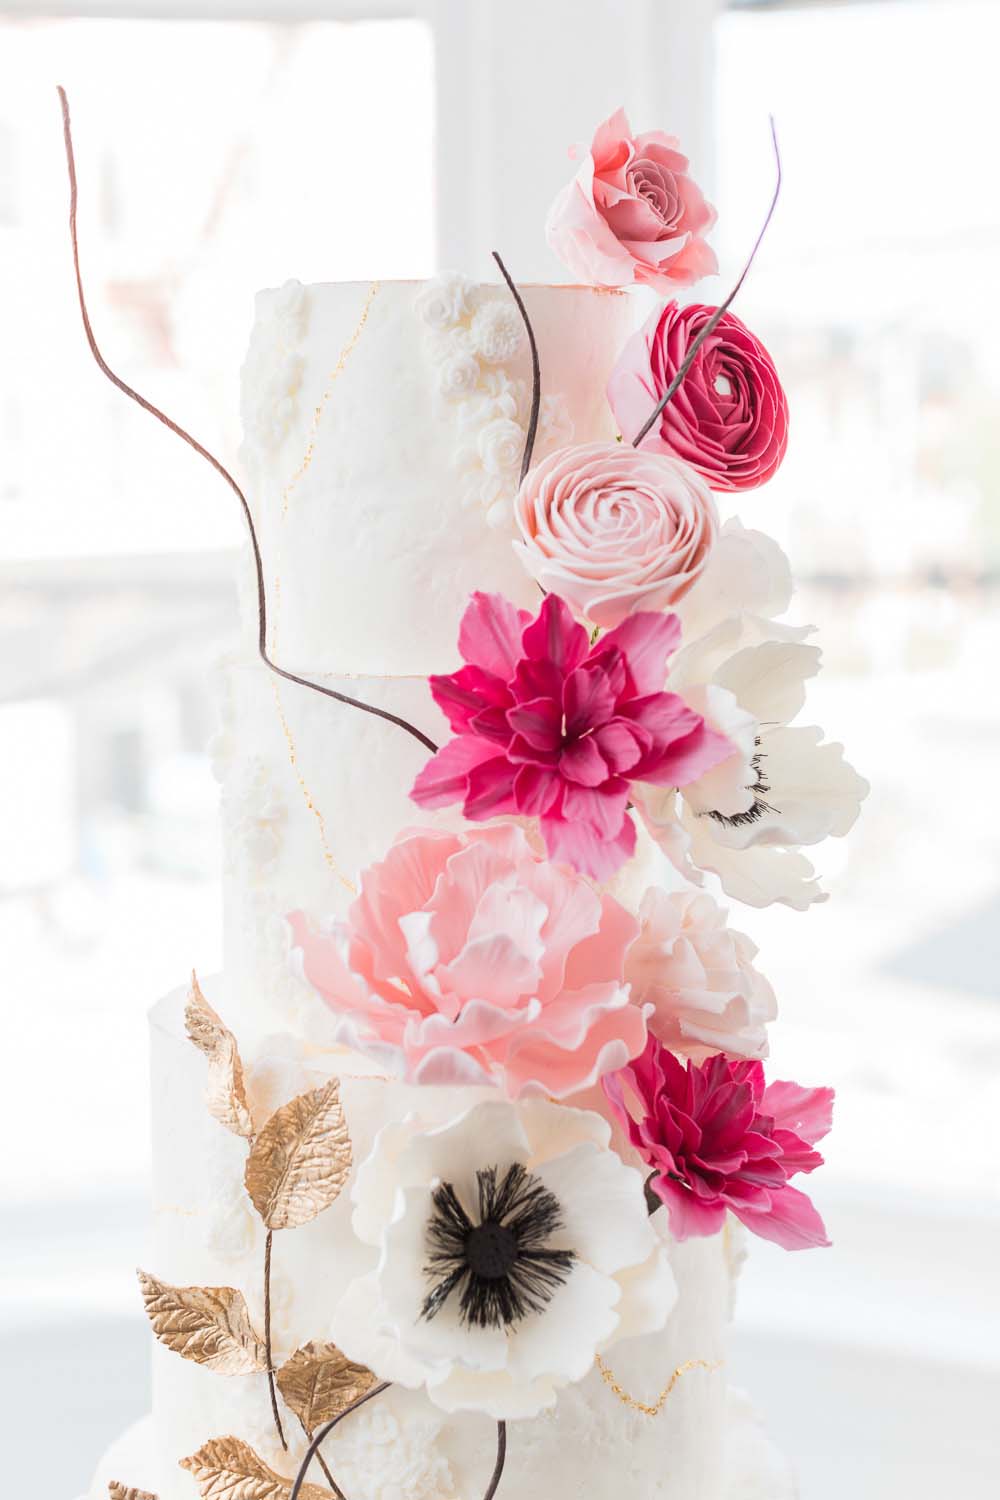 The Prettiest Romantic Pink Wedding Inspiration - wedding cake details